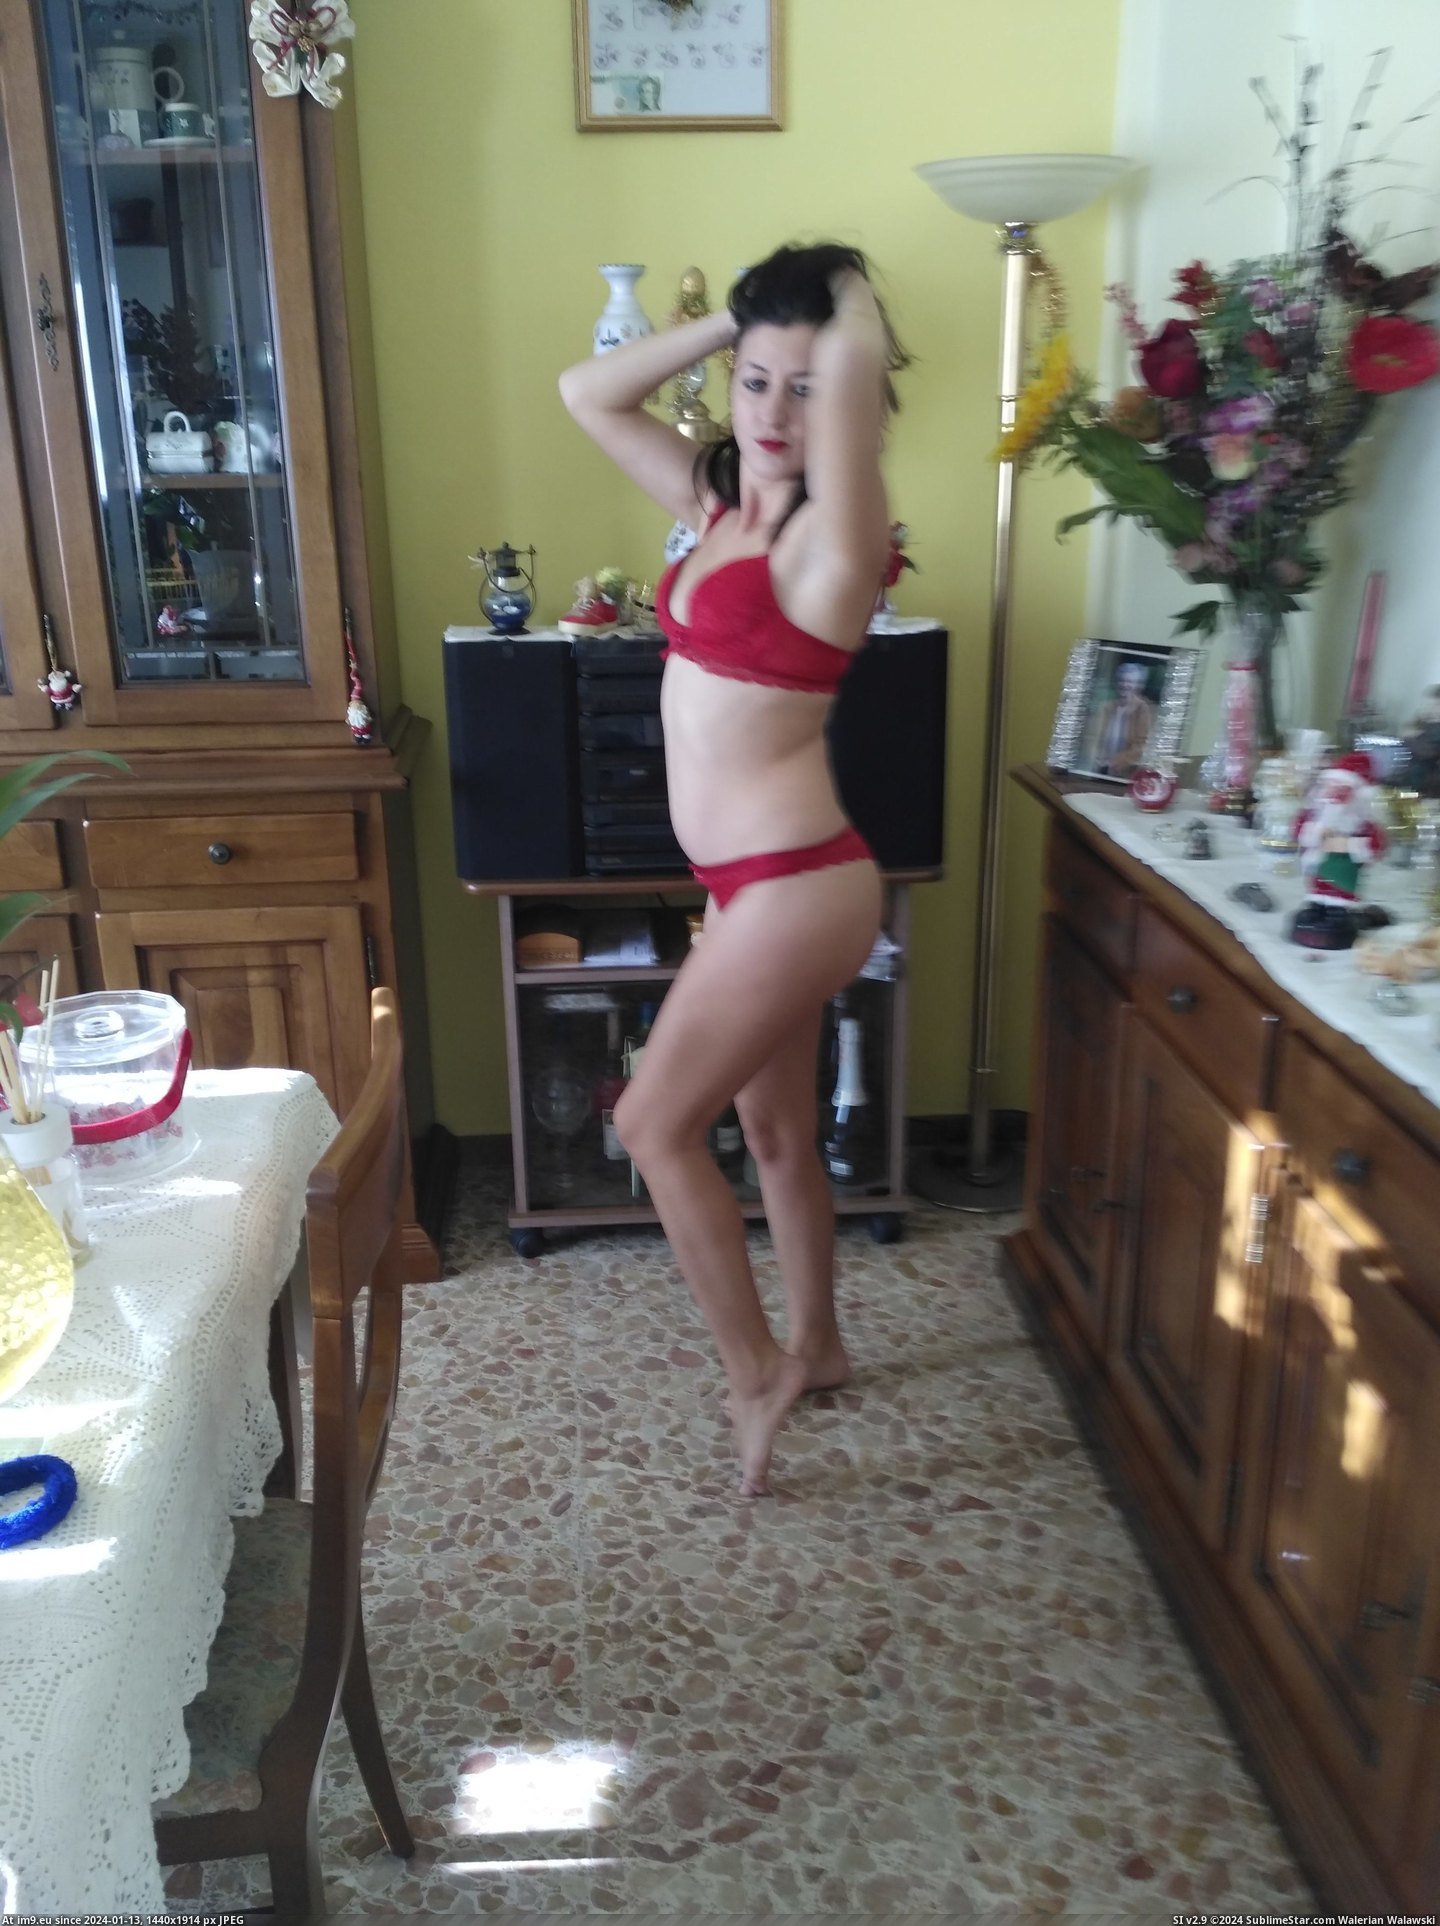 #Sexy #Pussy #Nude #Milf #Naked #Lingerie #Legs #Moglie #Italiana #Nuda IMG_20161227_105348 Pic. (Изображение из альбом Cinzia from Vigevano,Italy))